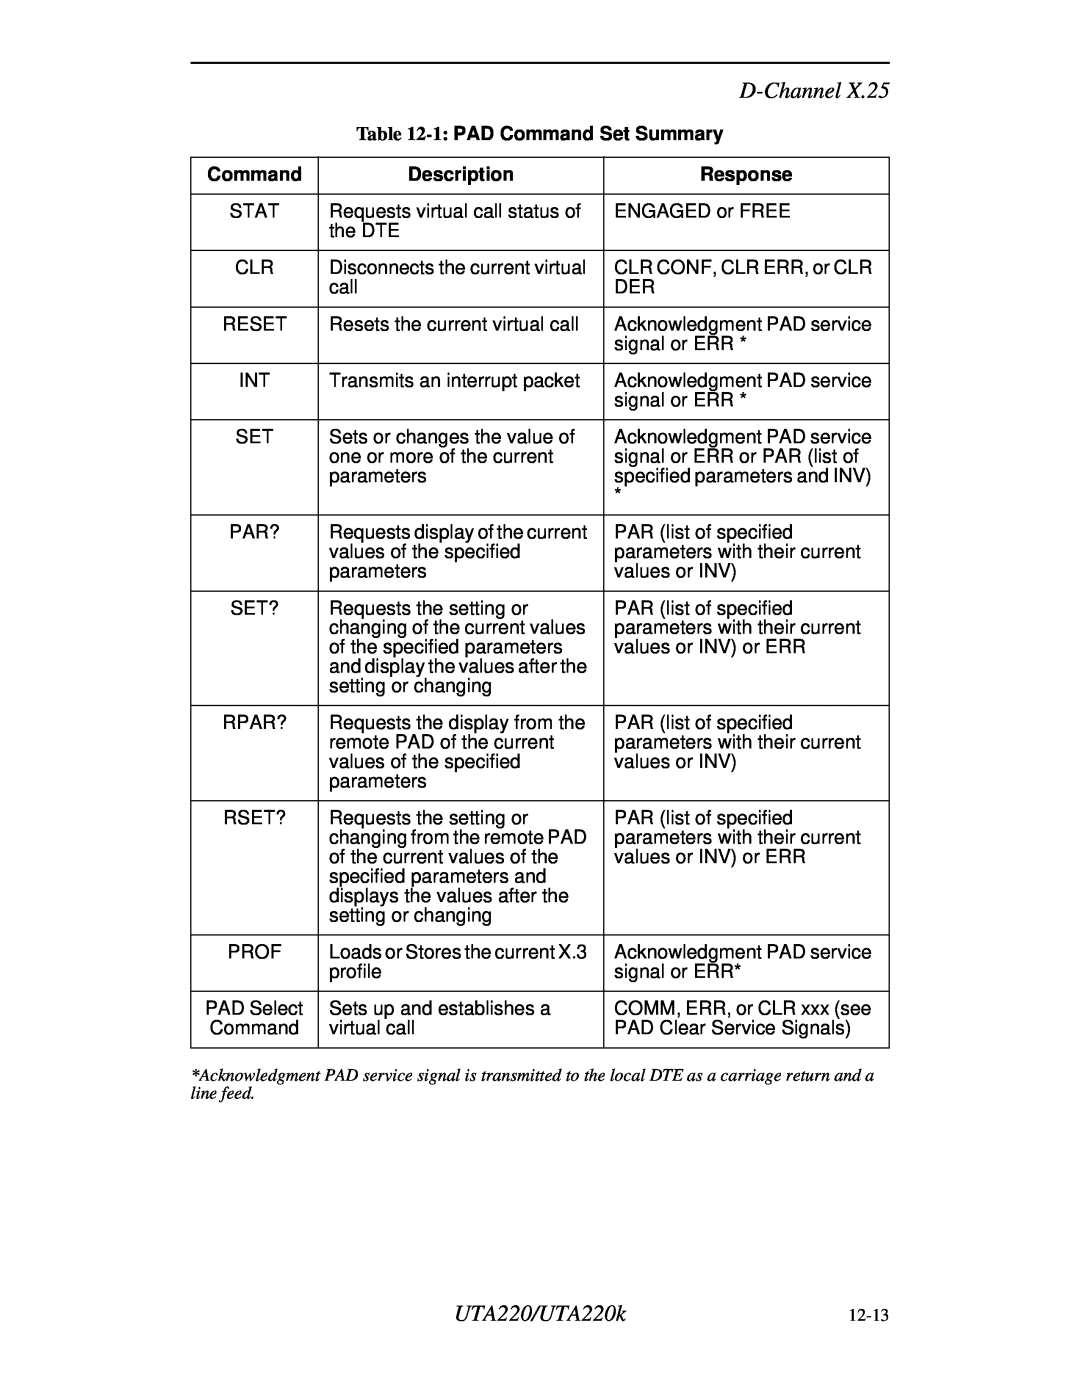 Northern UTA220/UTA220k manual 1 PAD Command Set Summary, Description, Response, D-Channel 